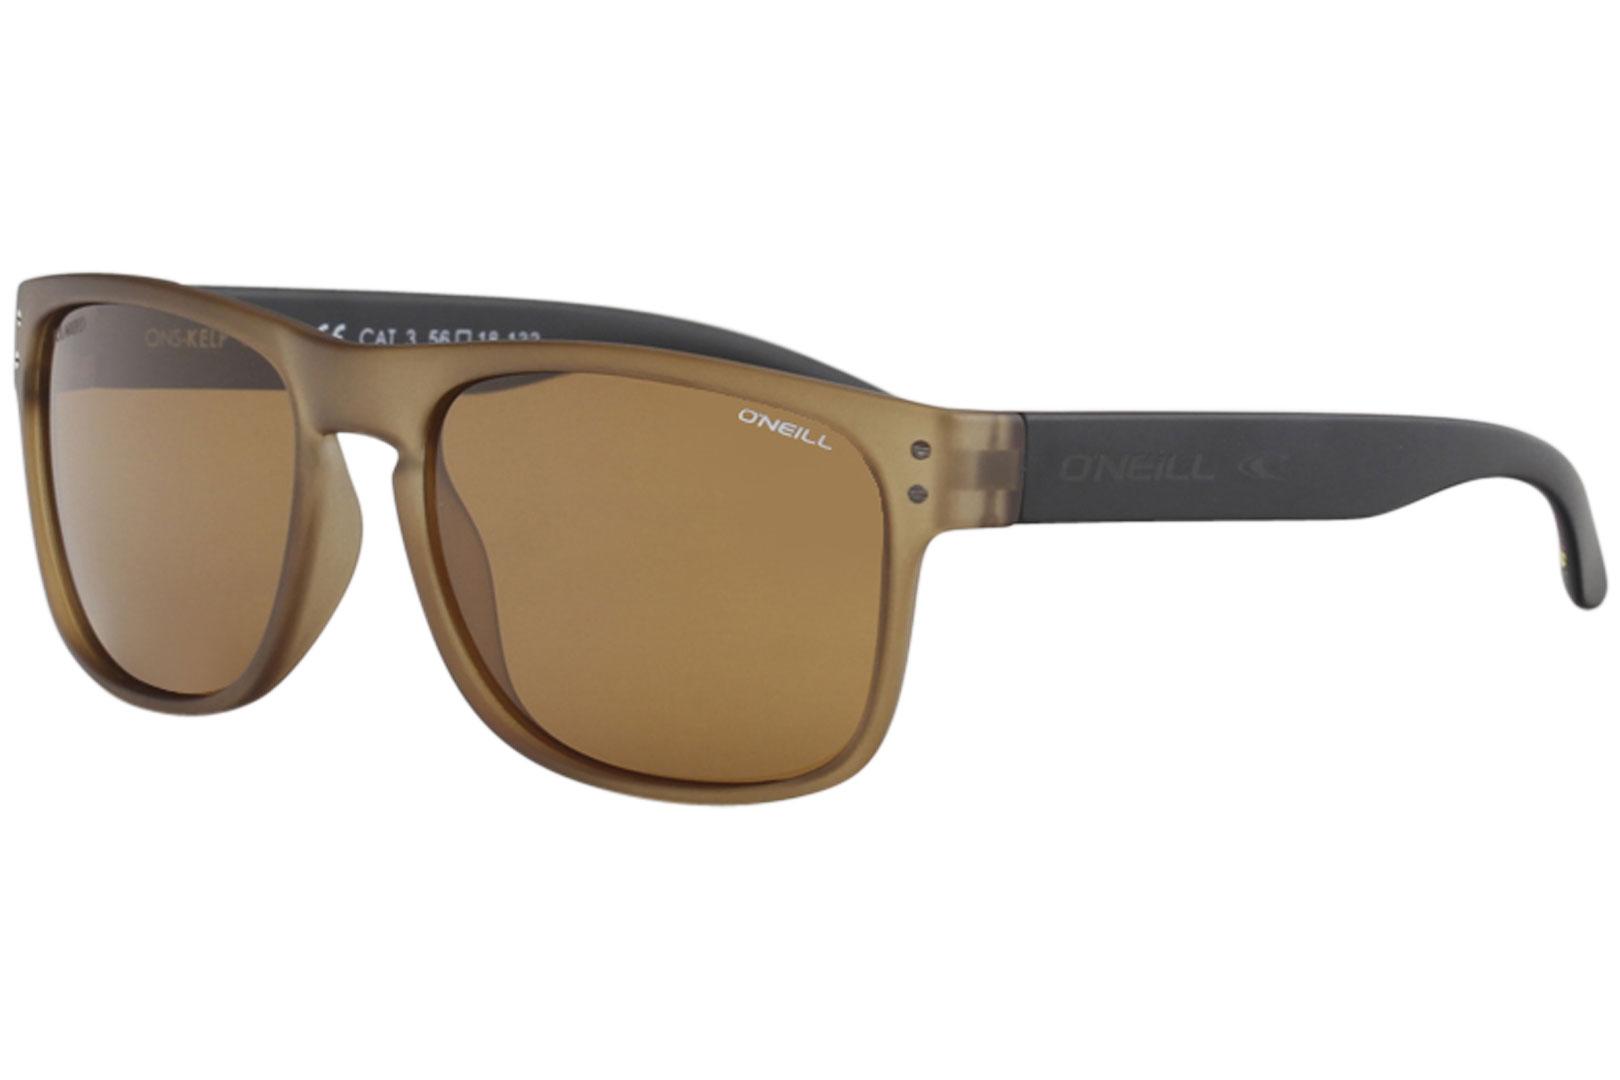 O'Neill Men's Ons-Kelp Fashion Rectangle ONeill Sunglasses | EyeSpecs.com